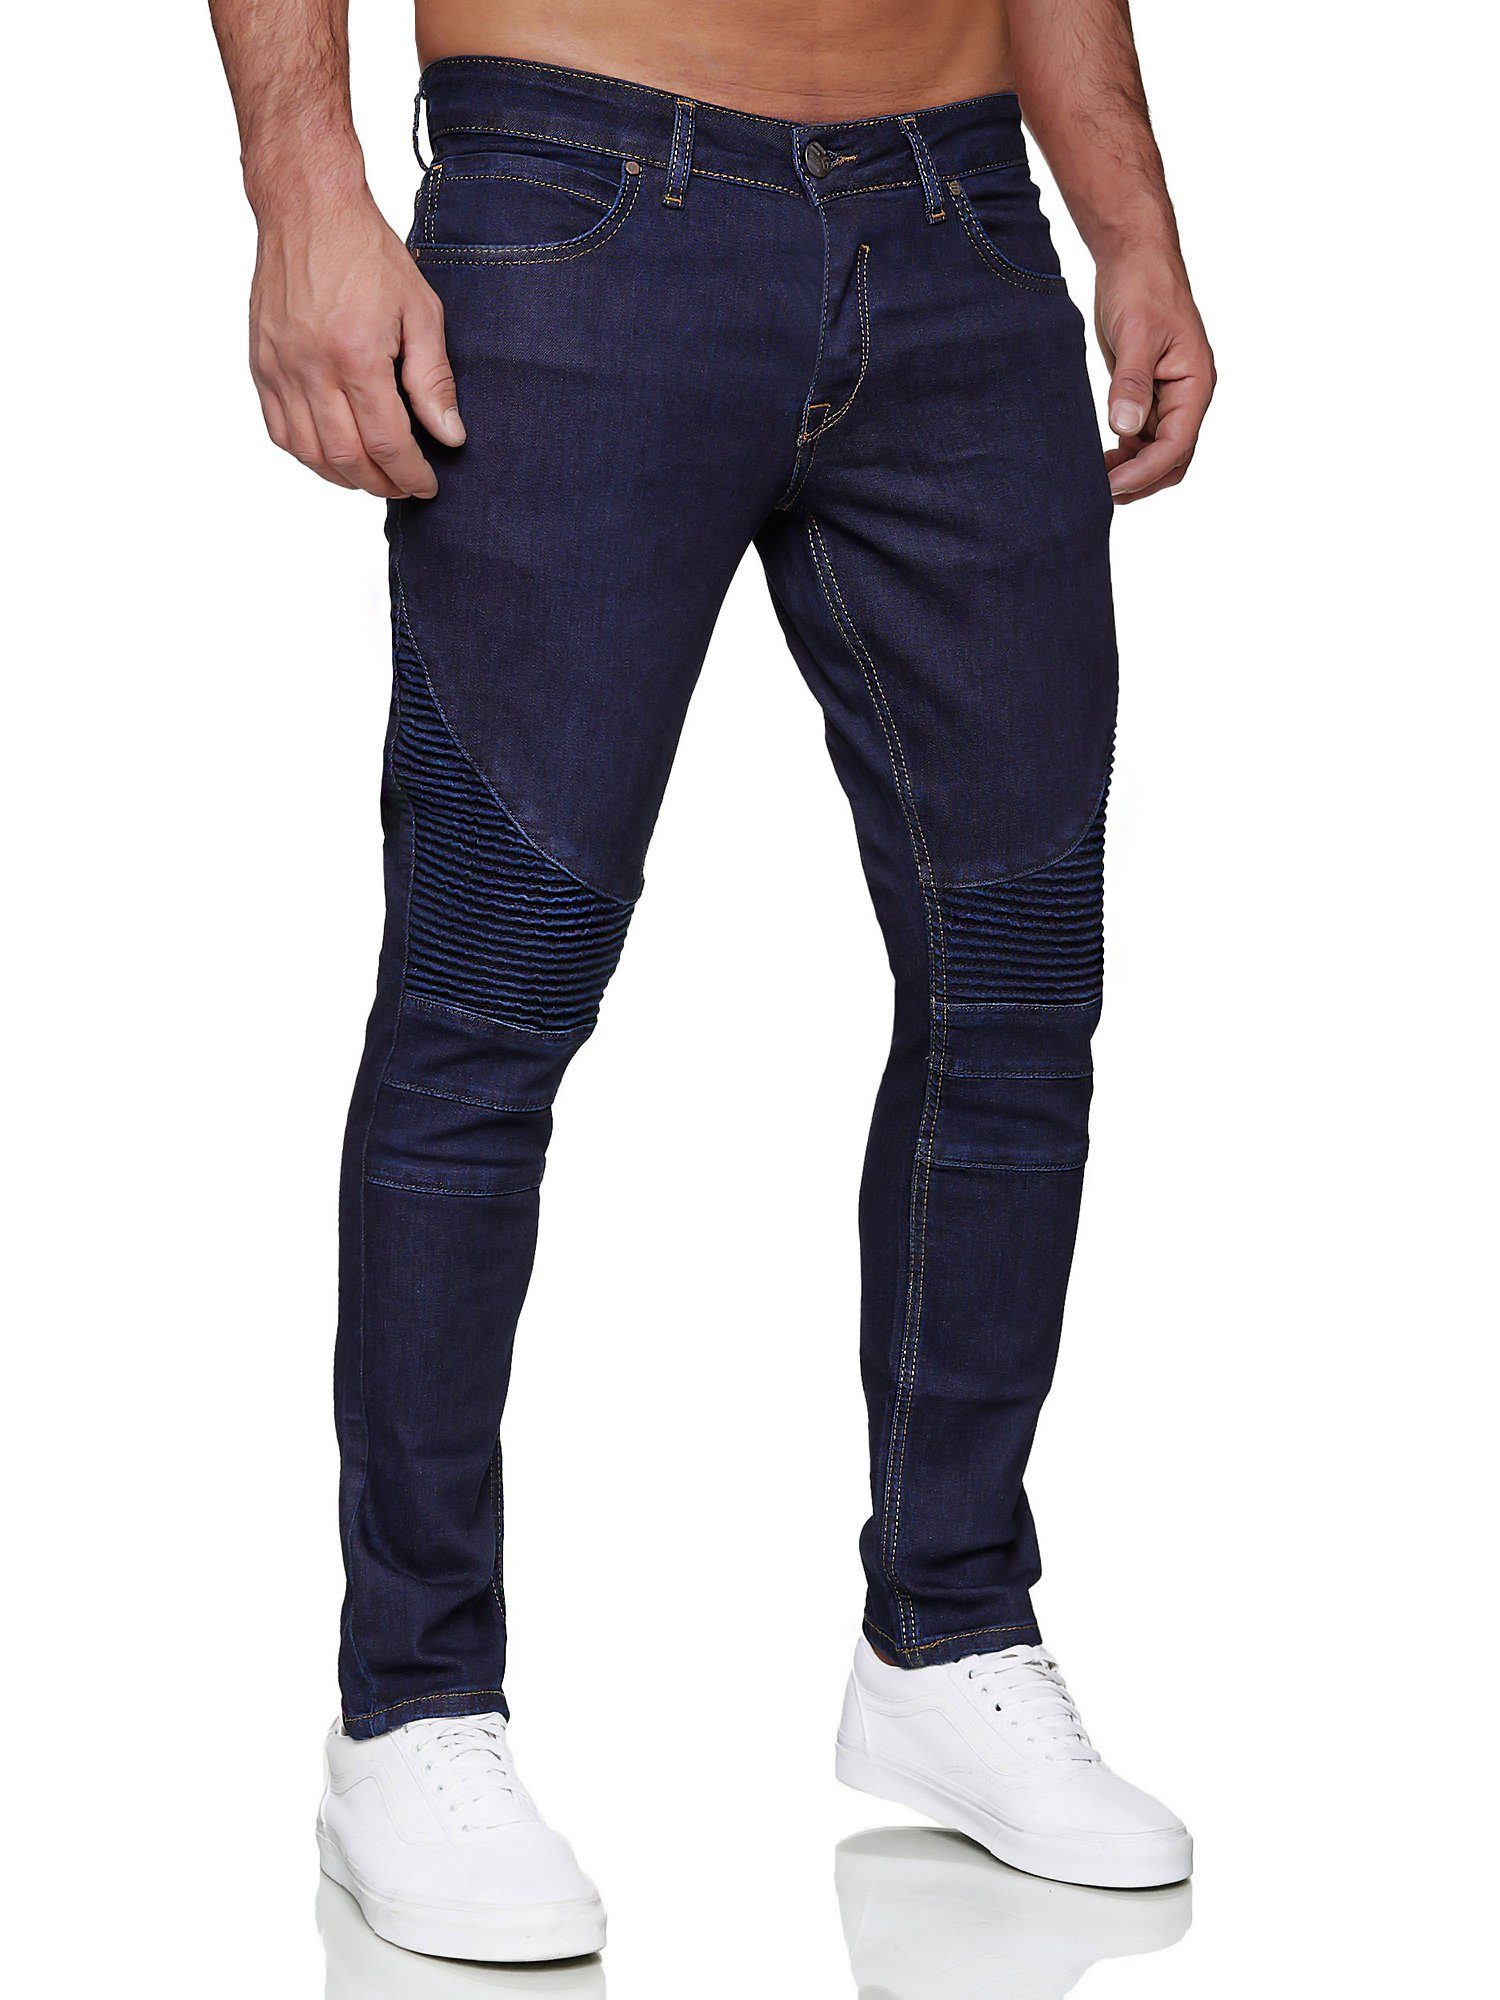 cooler Biker-Optik in Slim-fit-Jeans dunkelblau Tazzio 16517